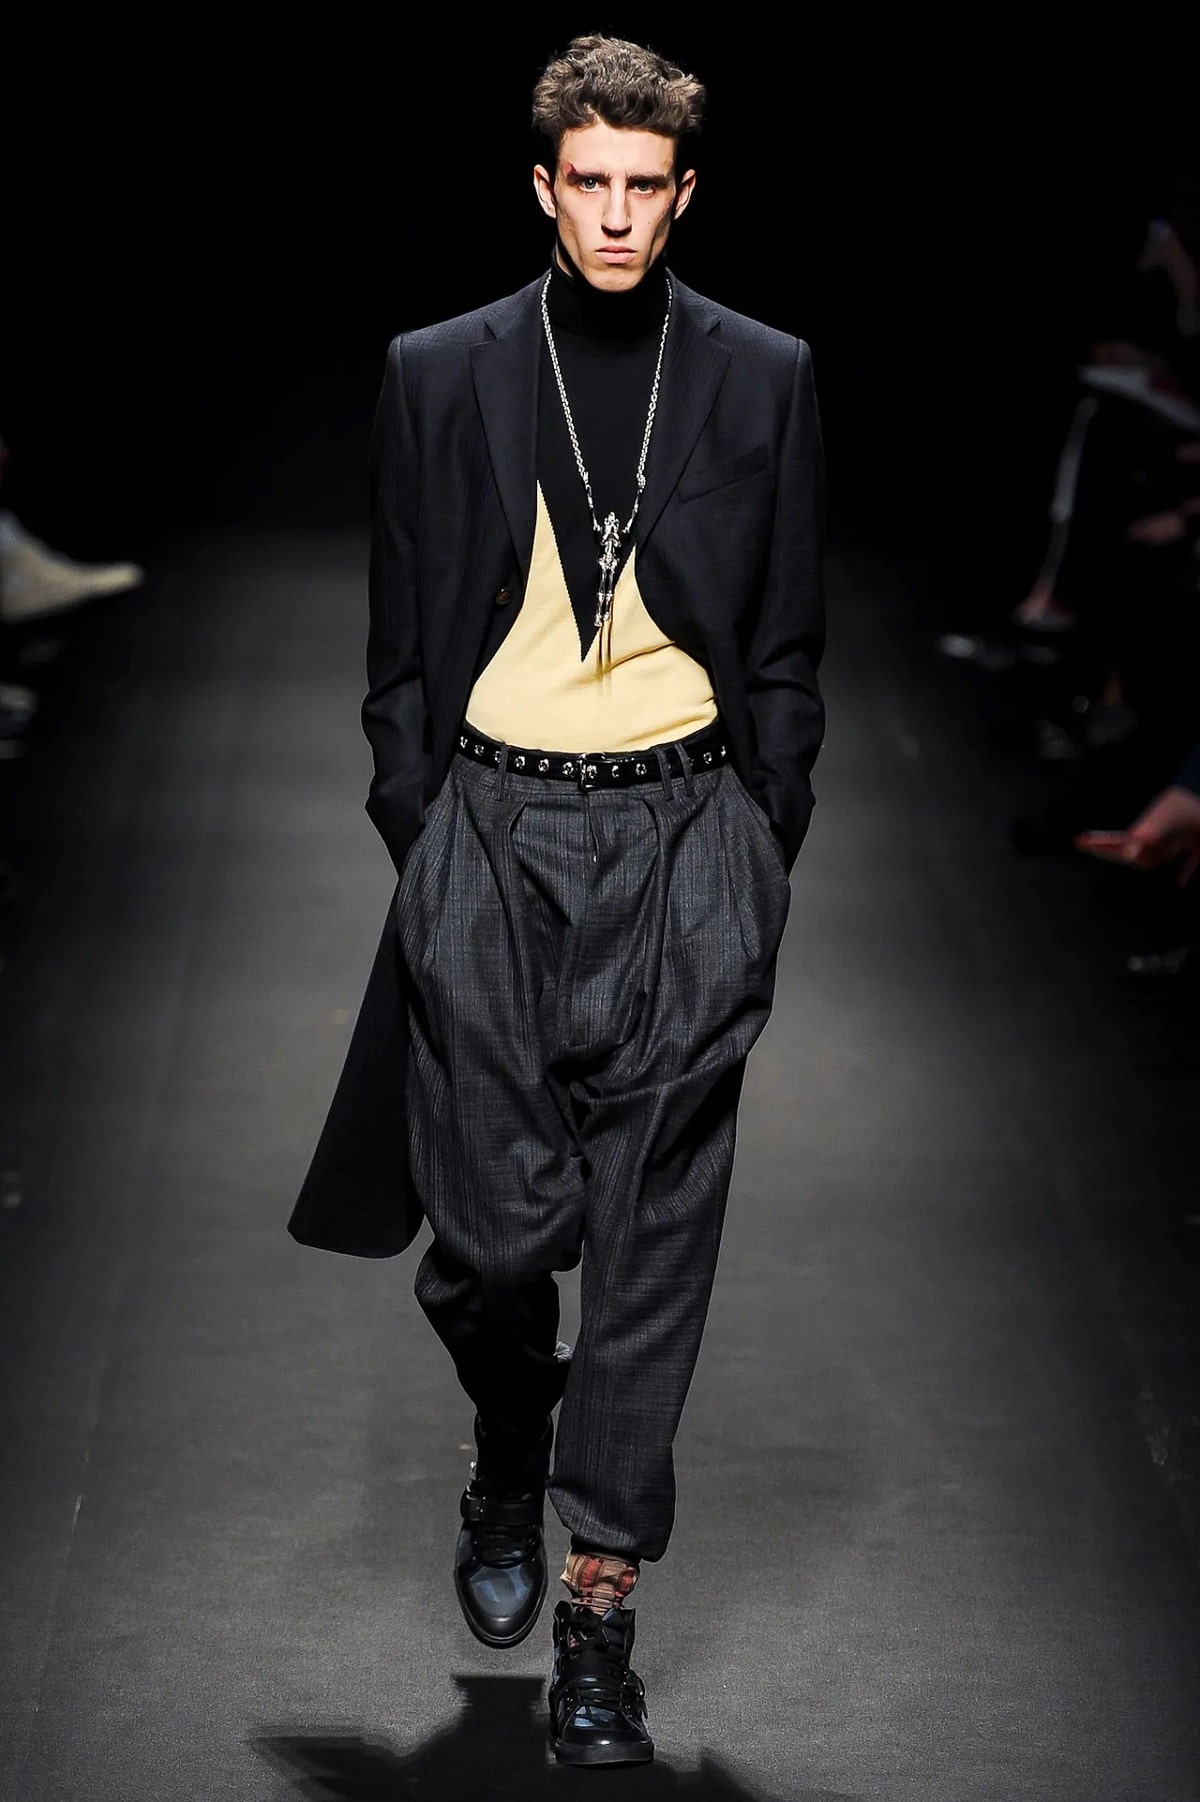 Vivienne Westwood Menswear Influence